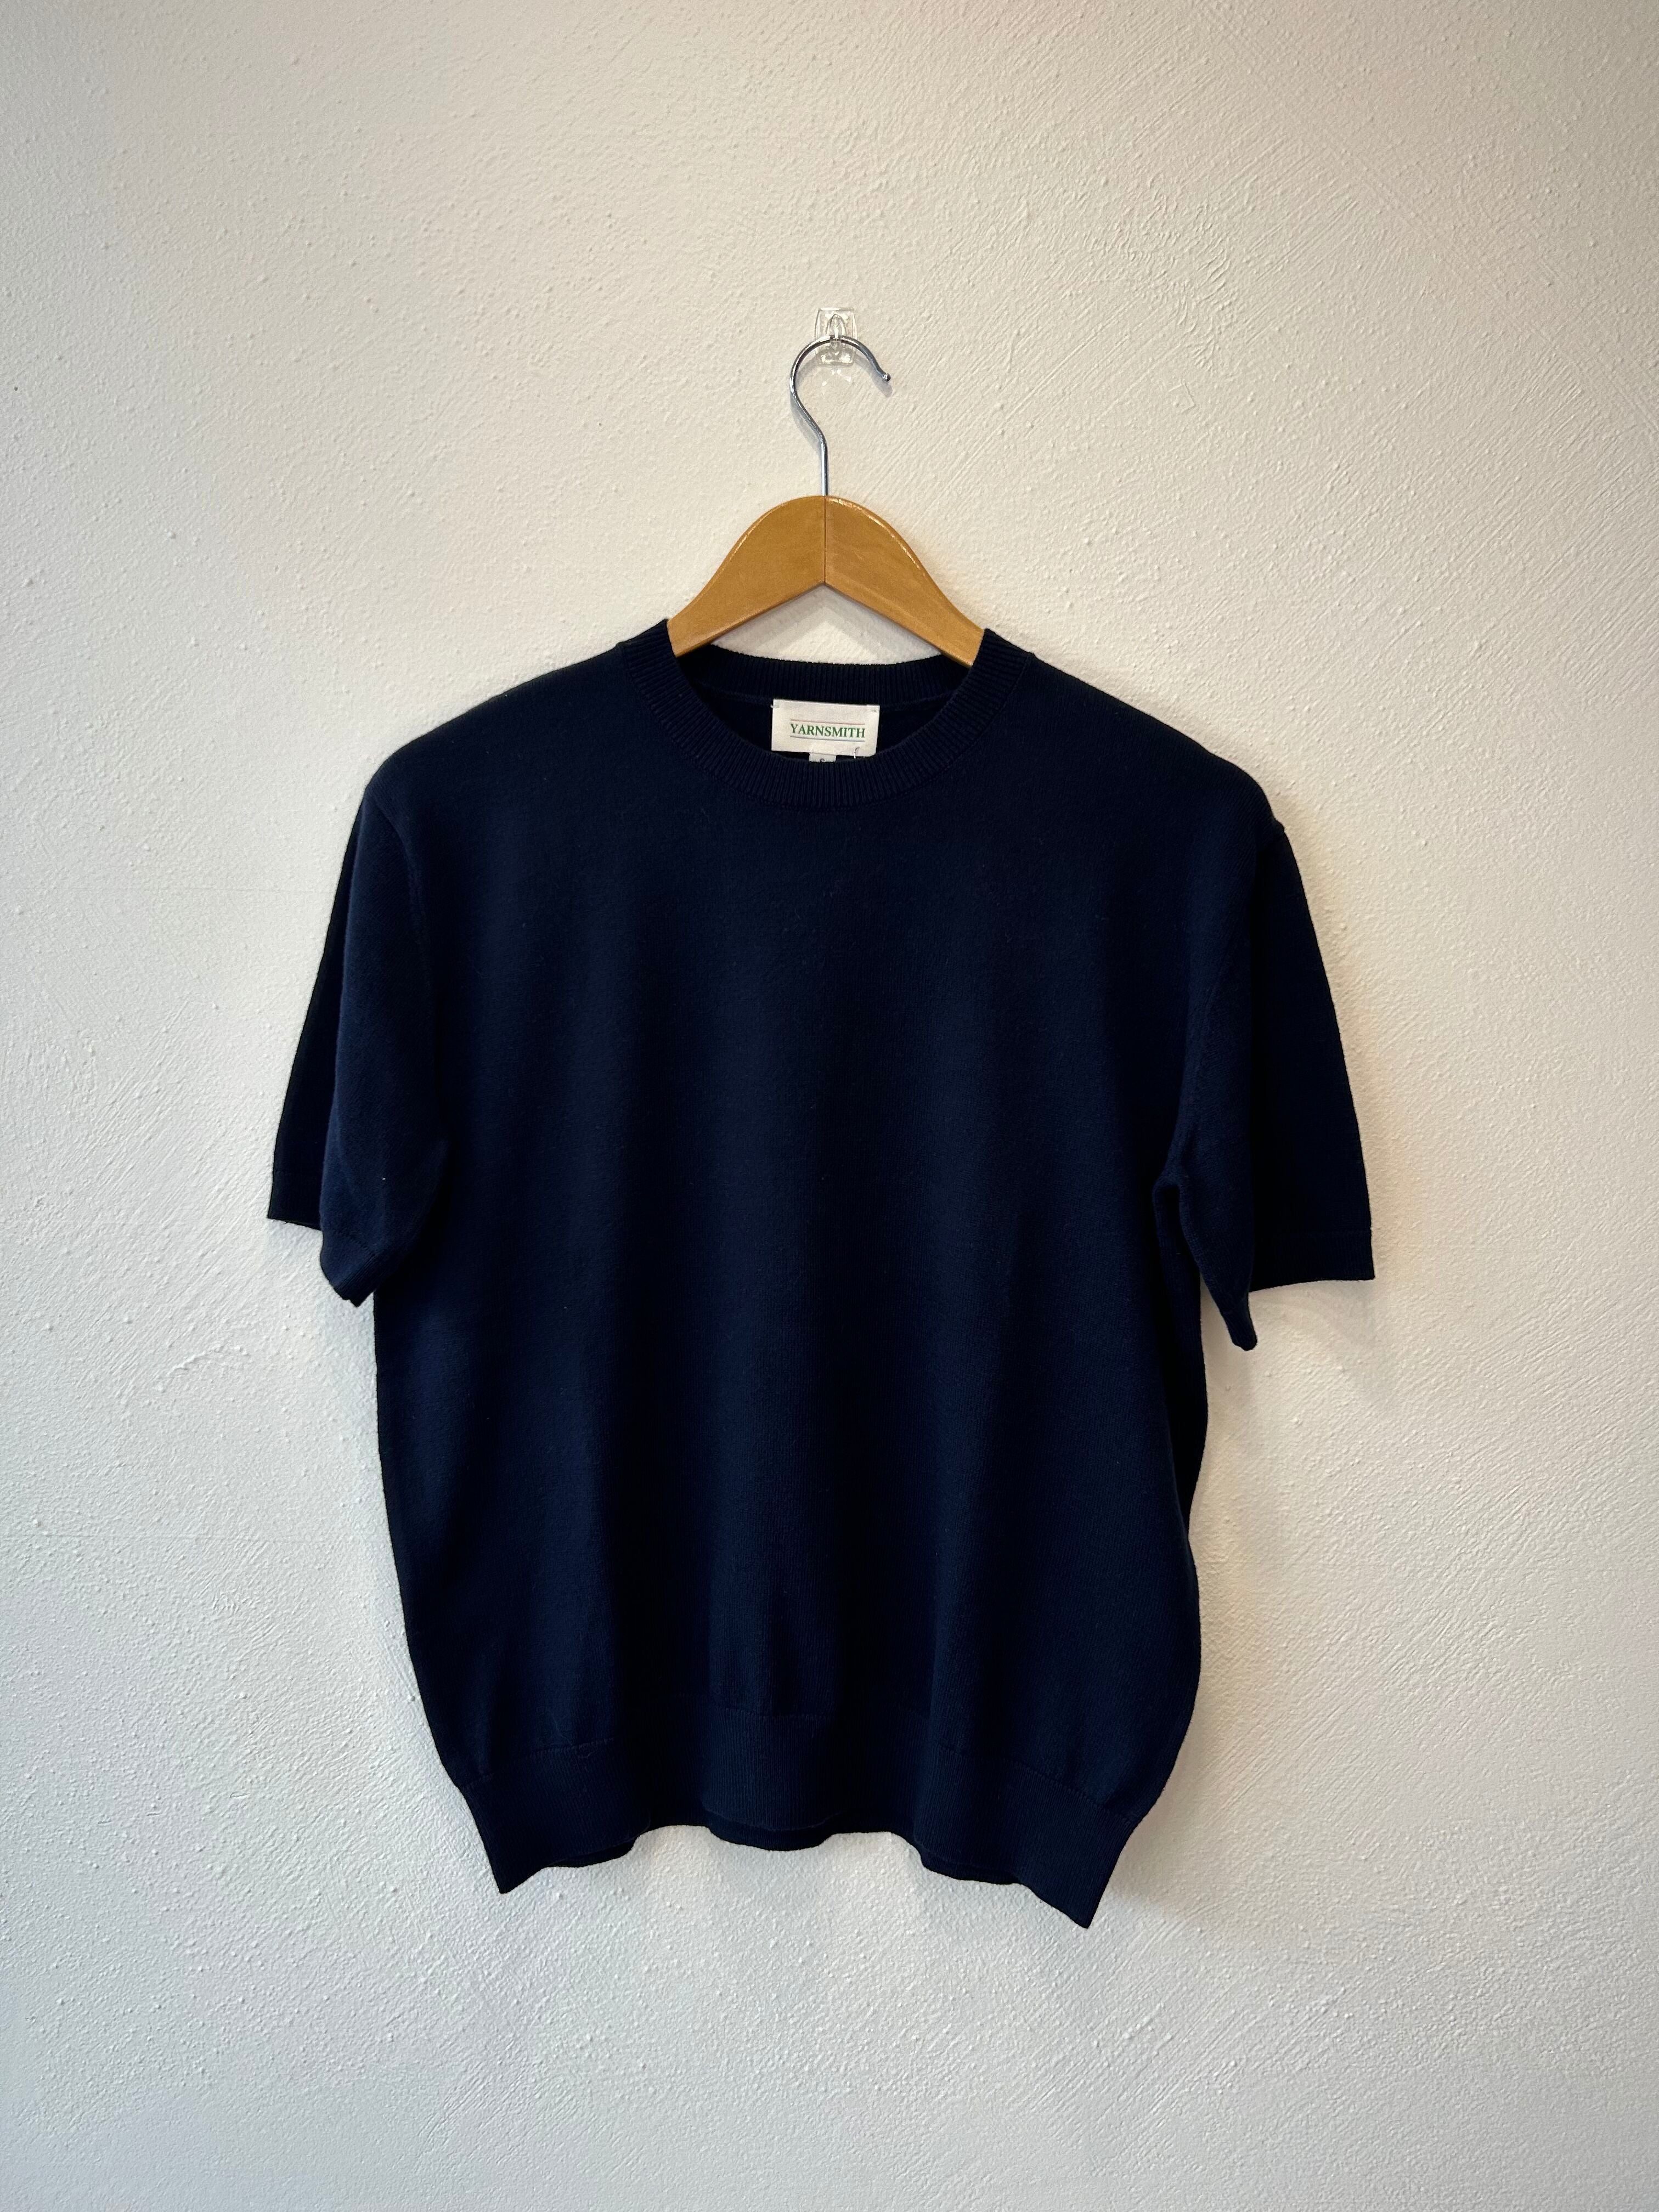 Beryl Cotton/Cashmere T Shirt Yarnsmith BRK3A Navy